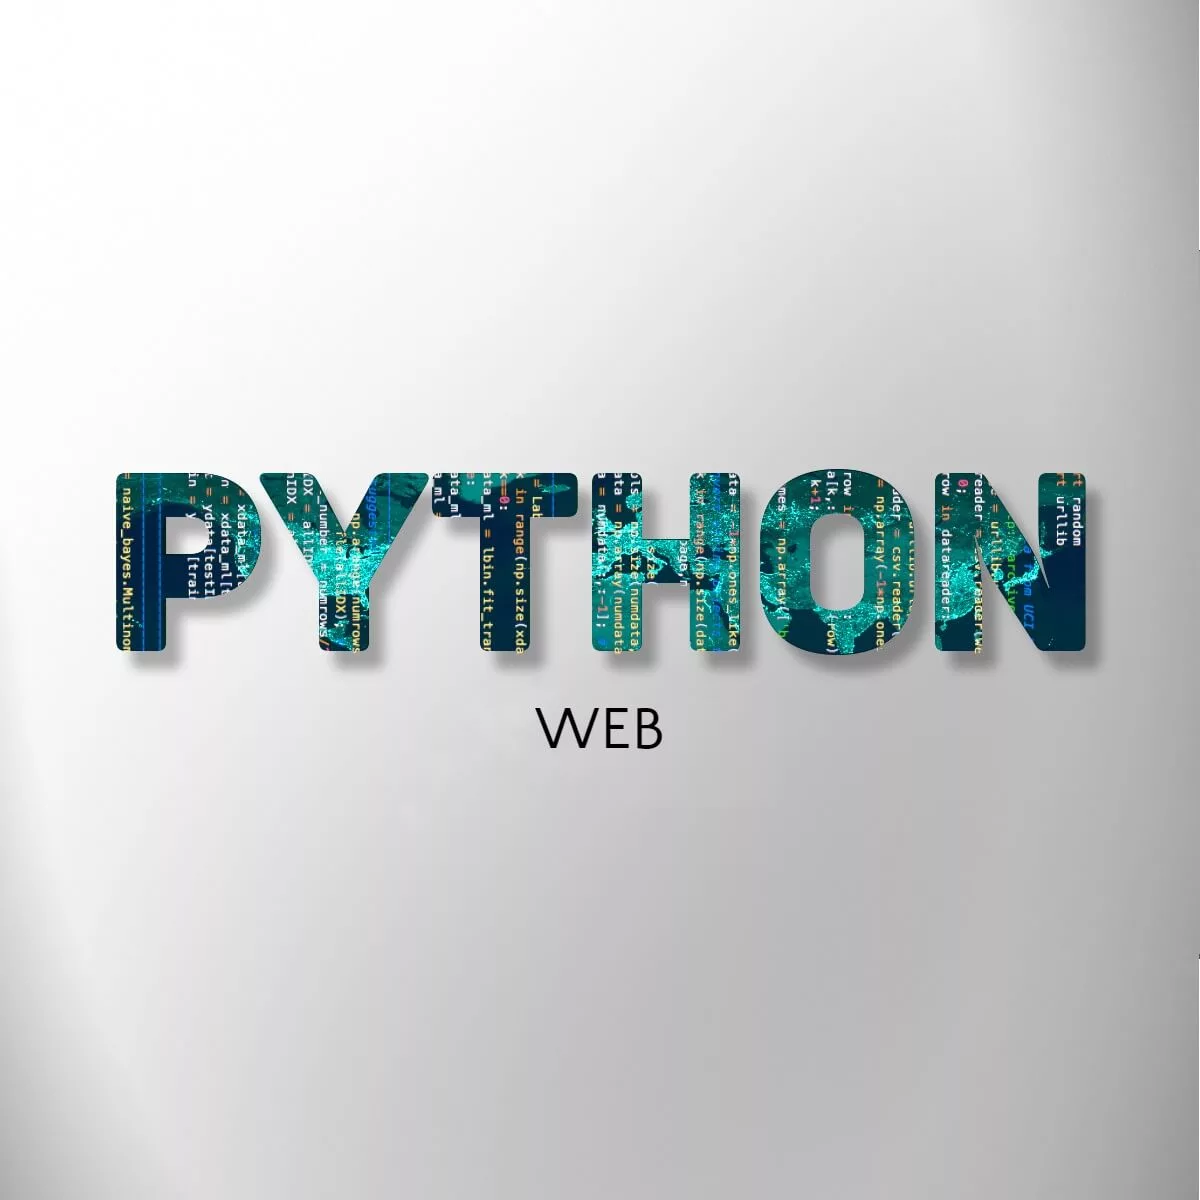 Web App Development using python